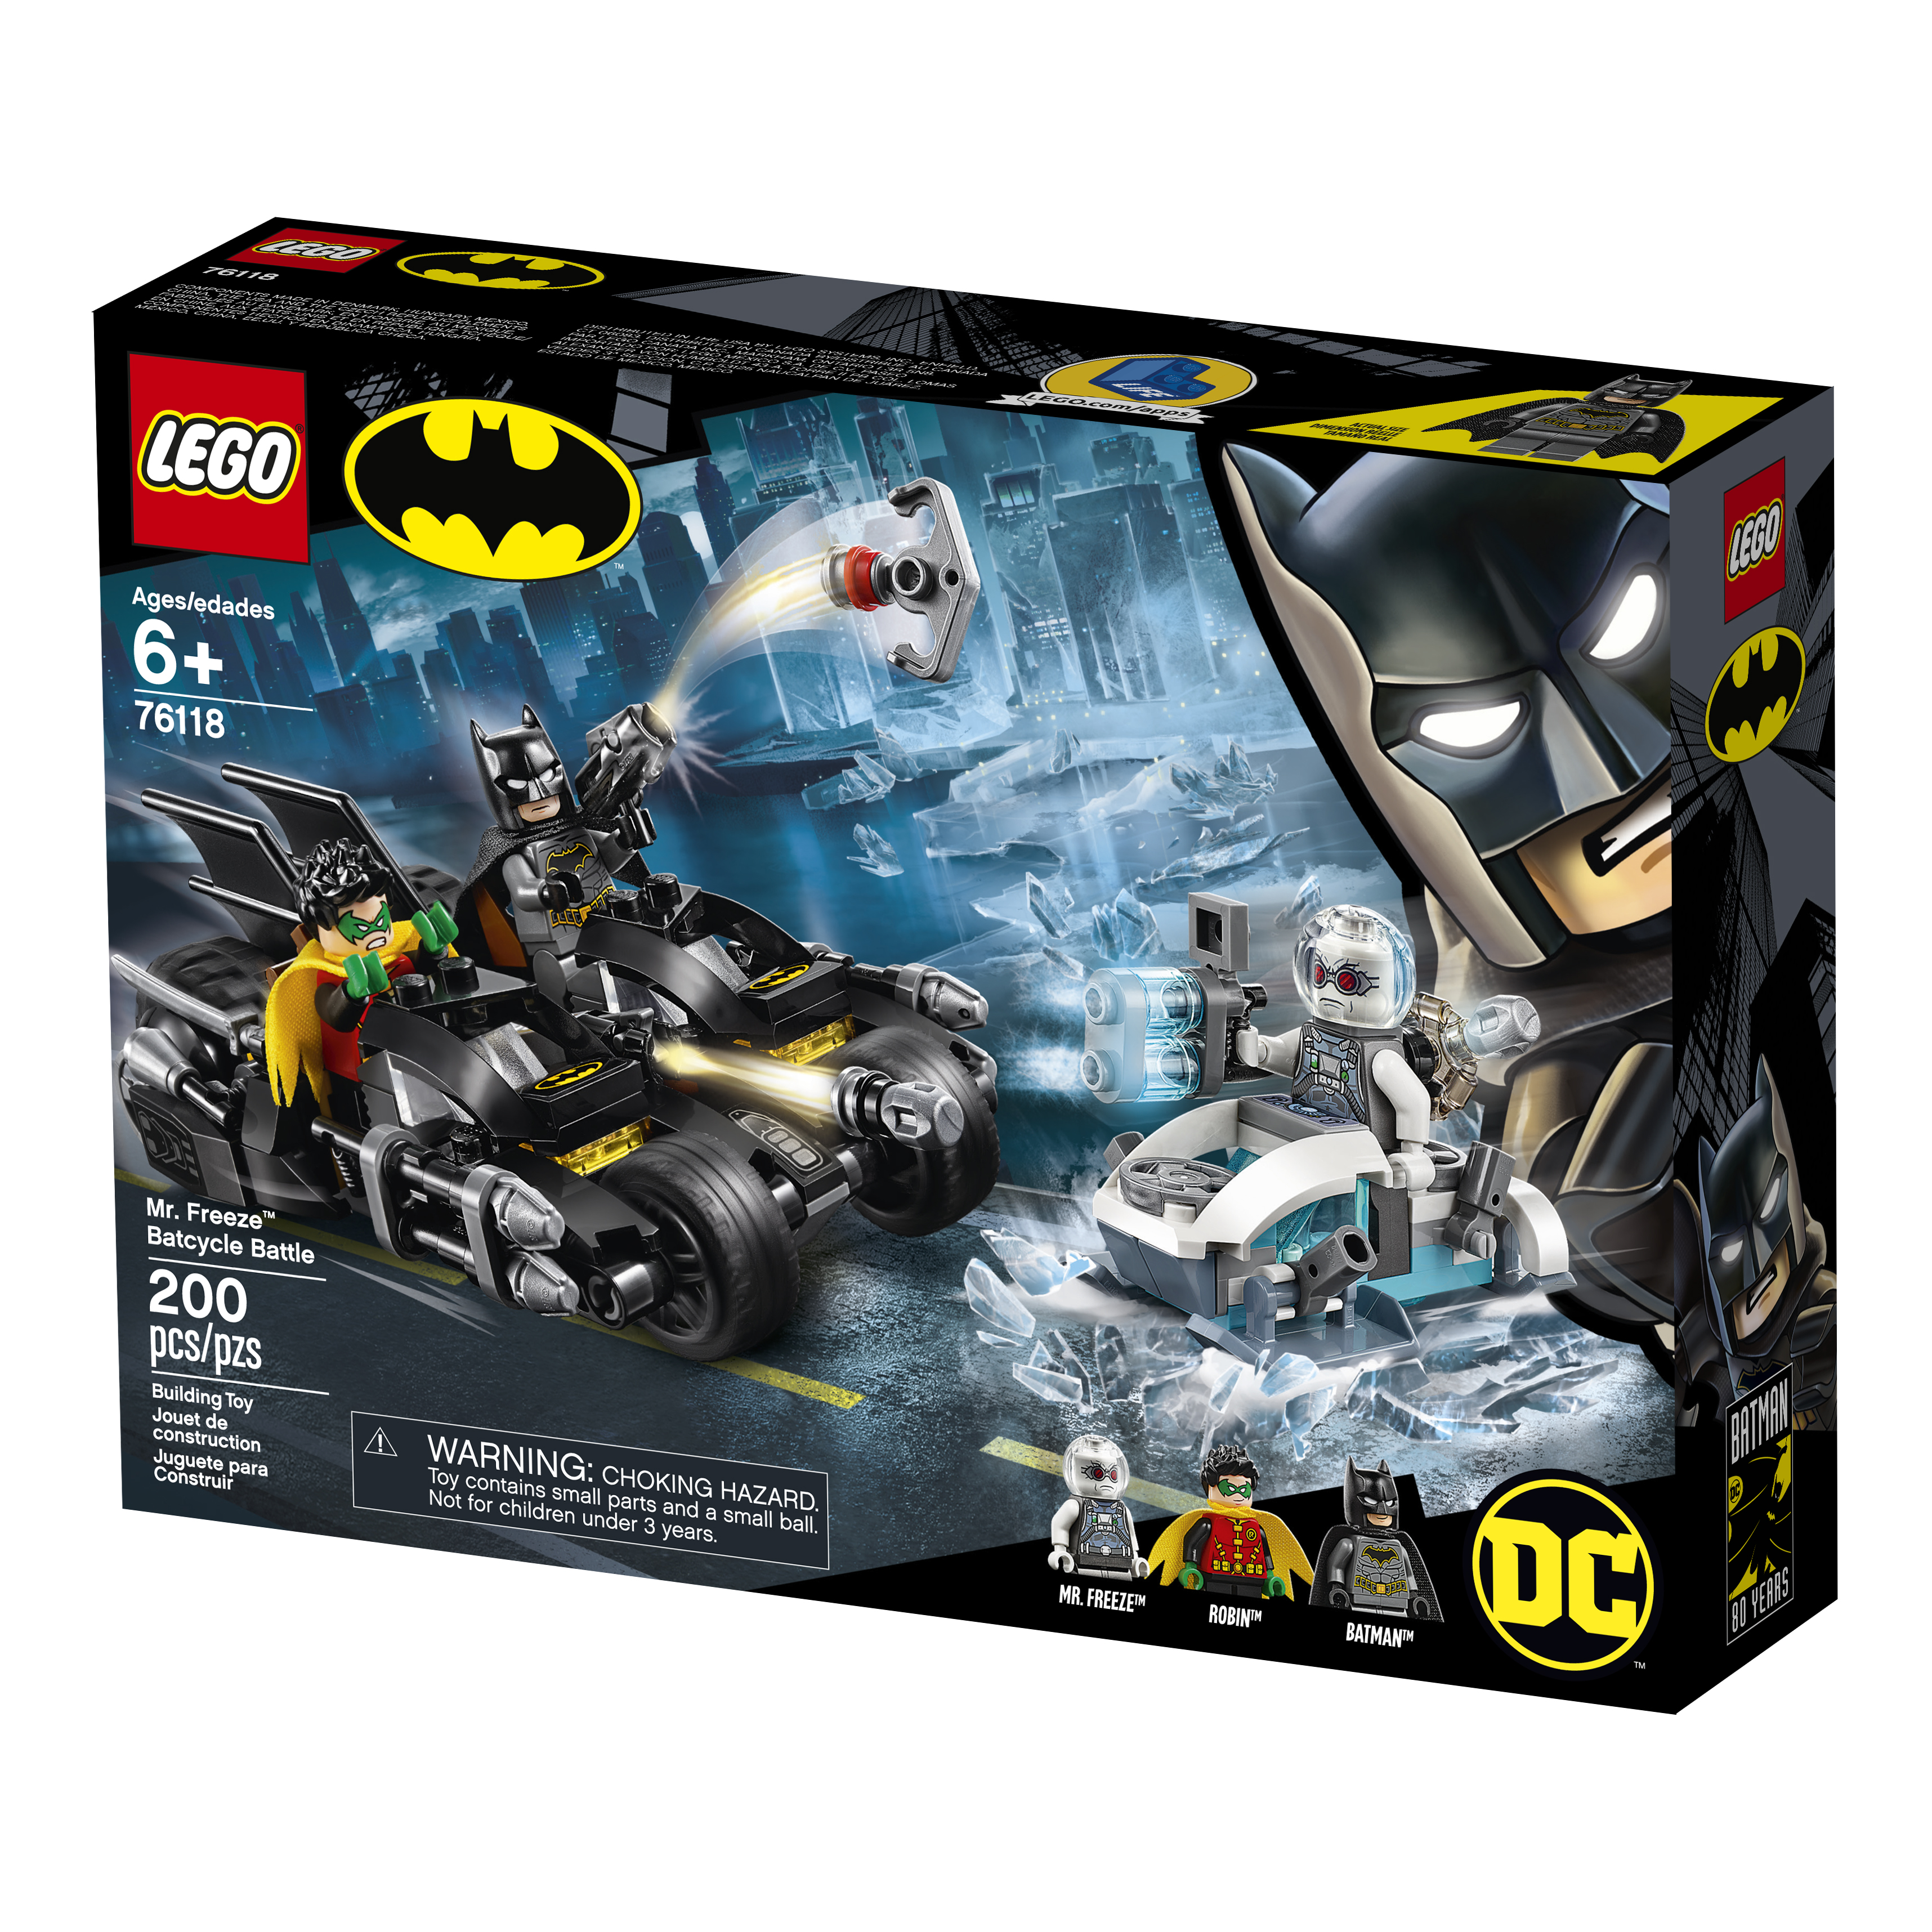 LEGO Batman Mr. Freeze Batcycle Battle (76118) Available Early at Walmart -  The Brick Fan